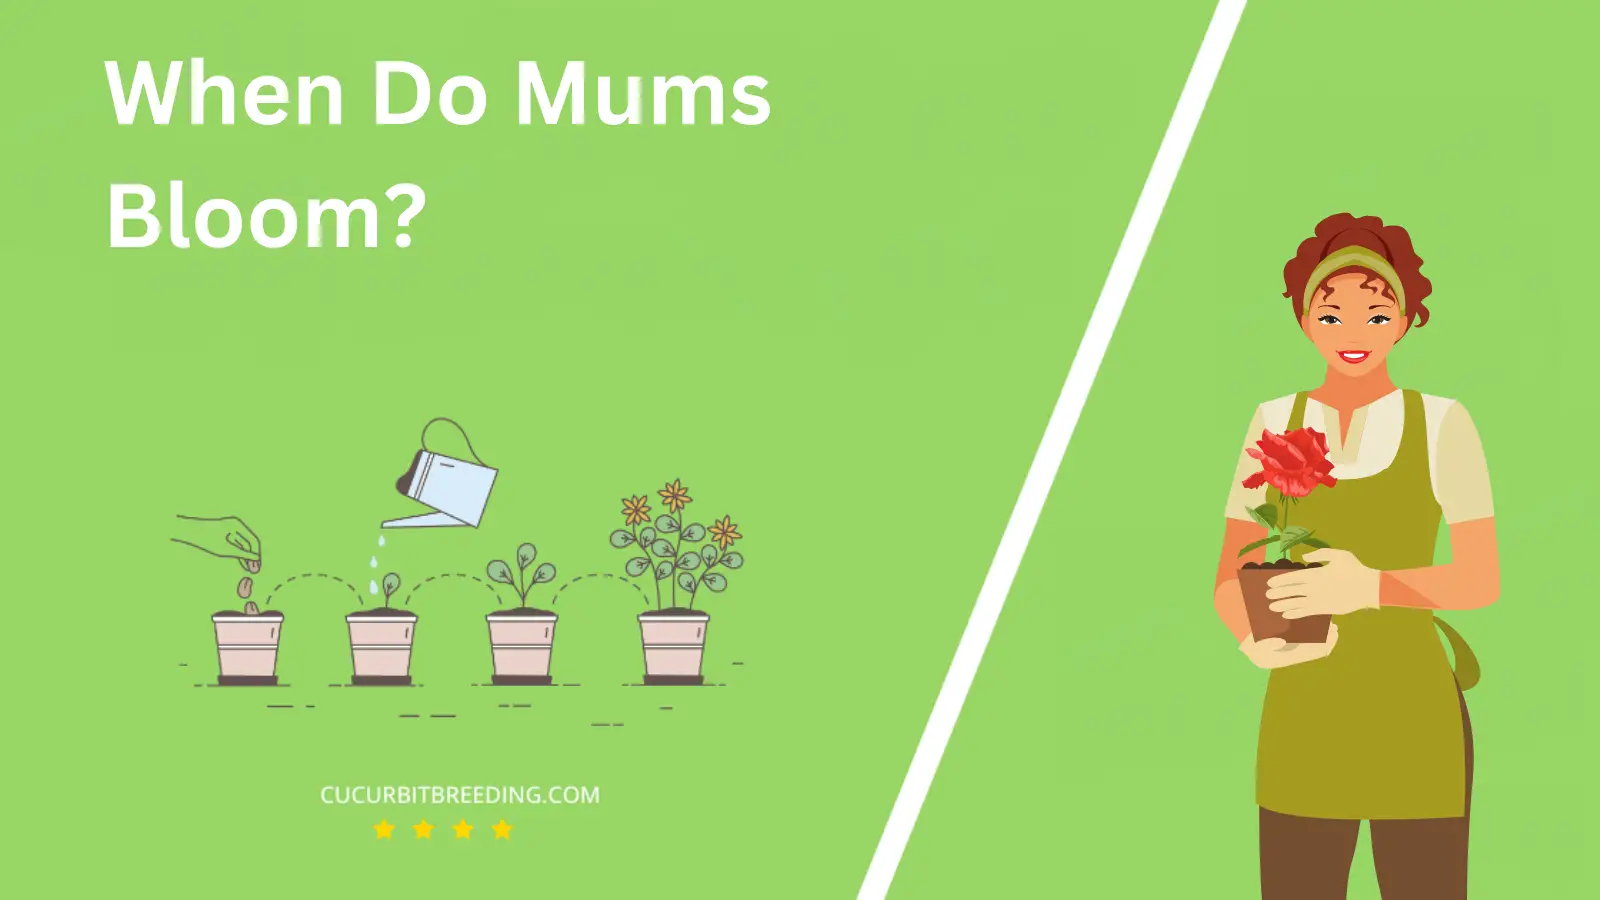 When Do Mums Bloom?